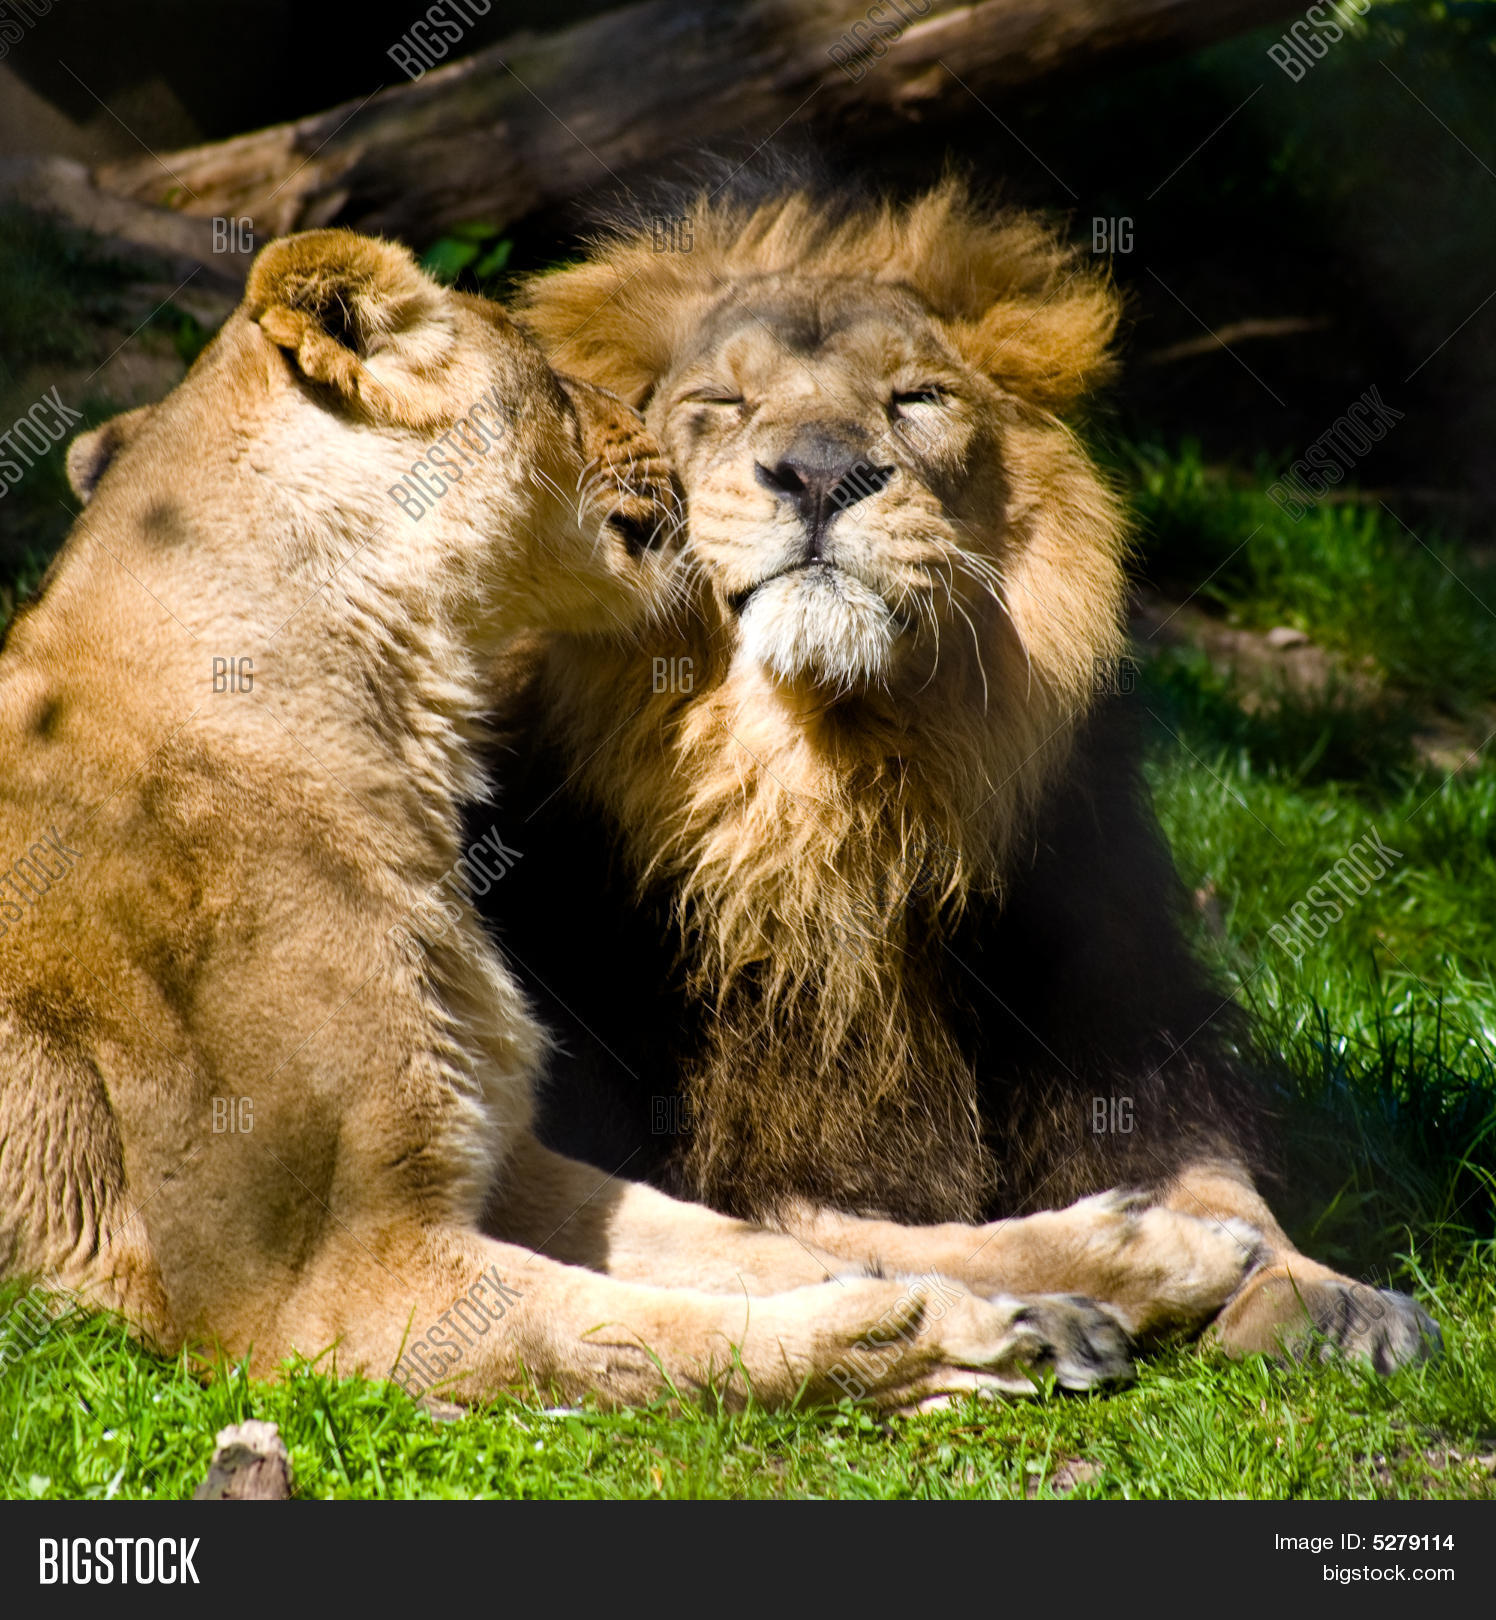 Lions Kissing Image & Photo | Bigstock